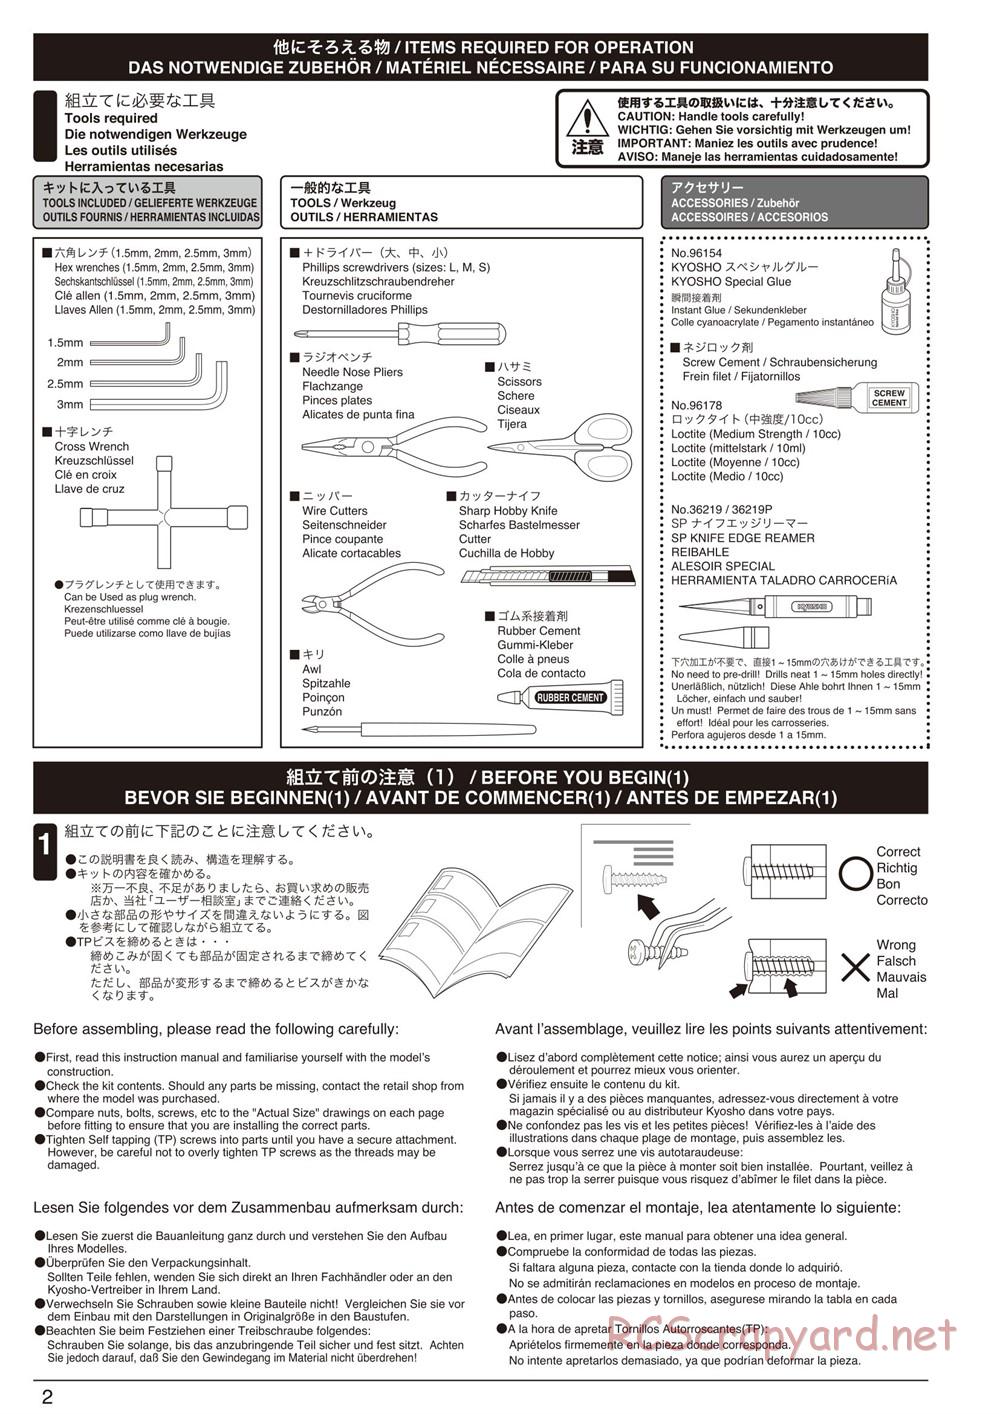 Kyosho - Inferno NEO ST Race Spec - Manual - Page 2